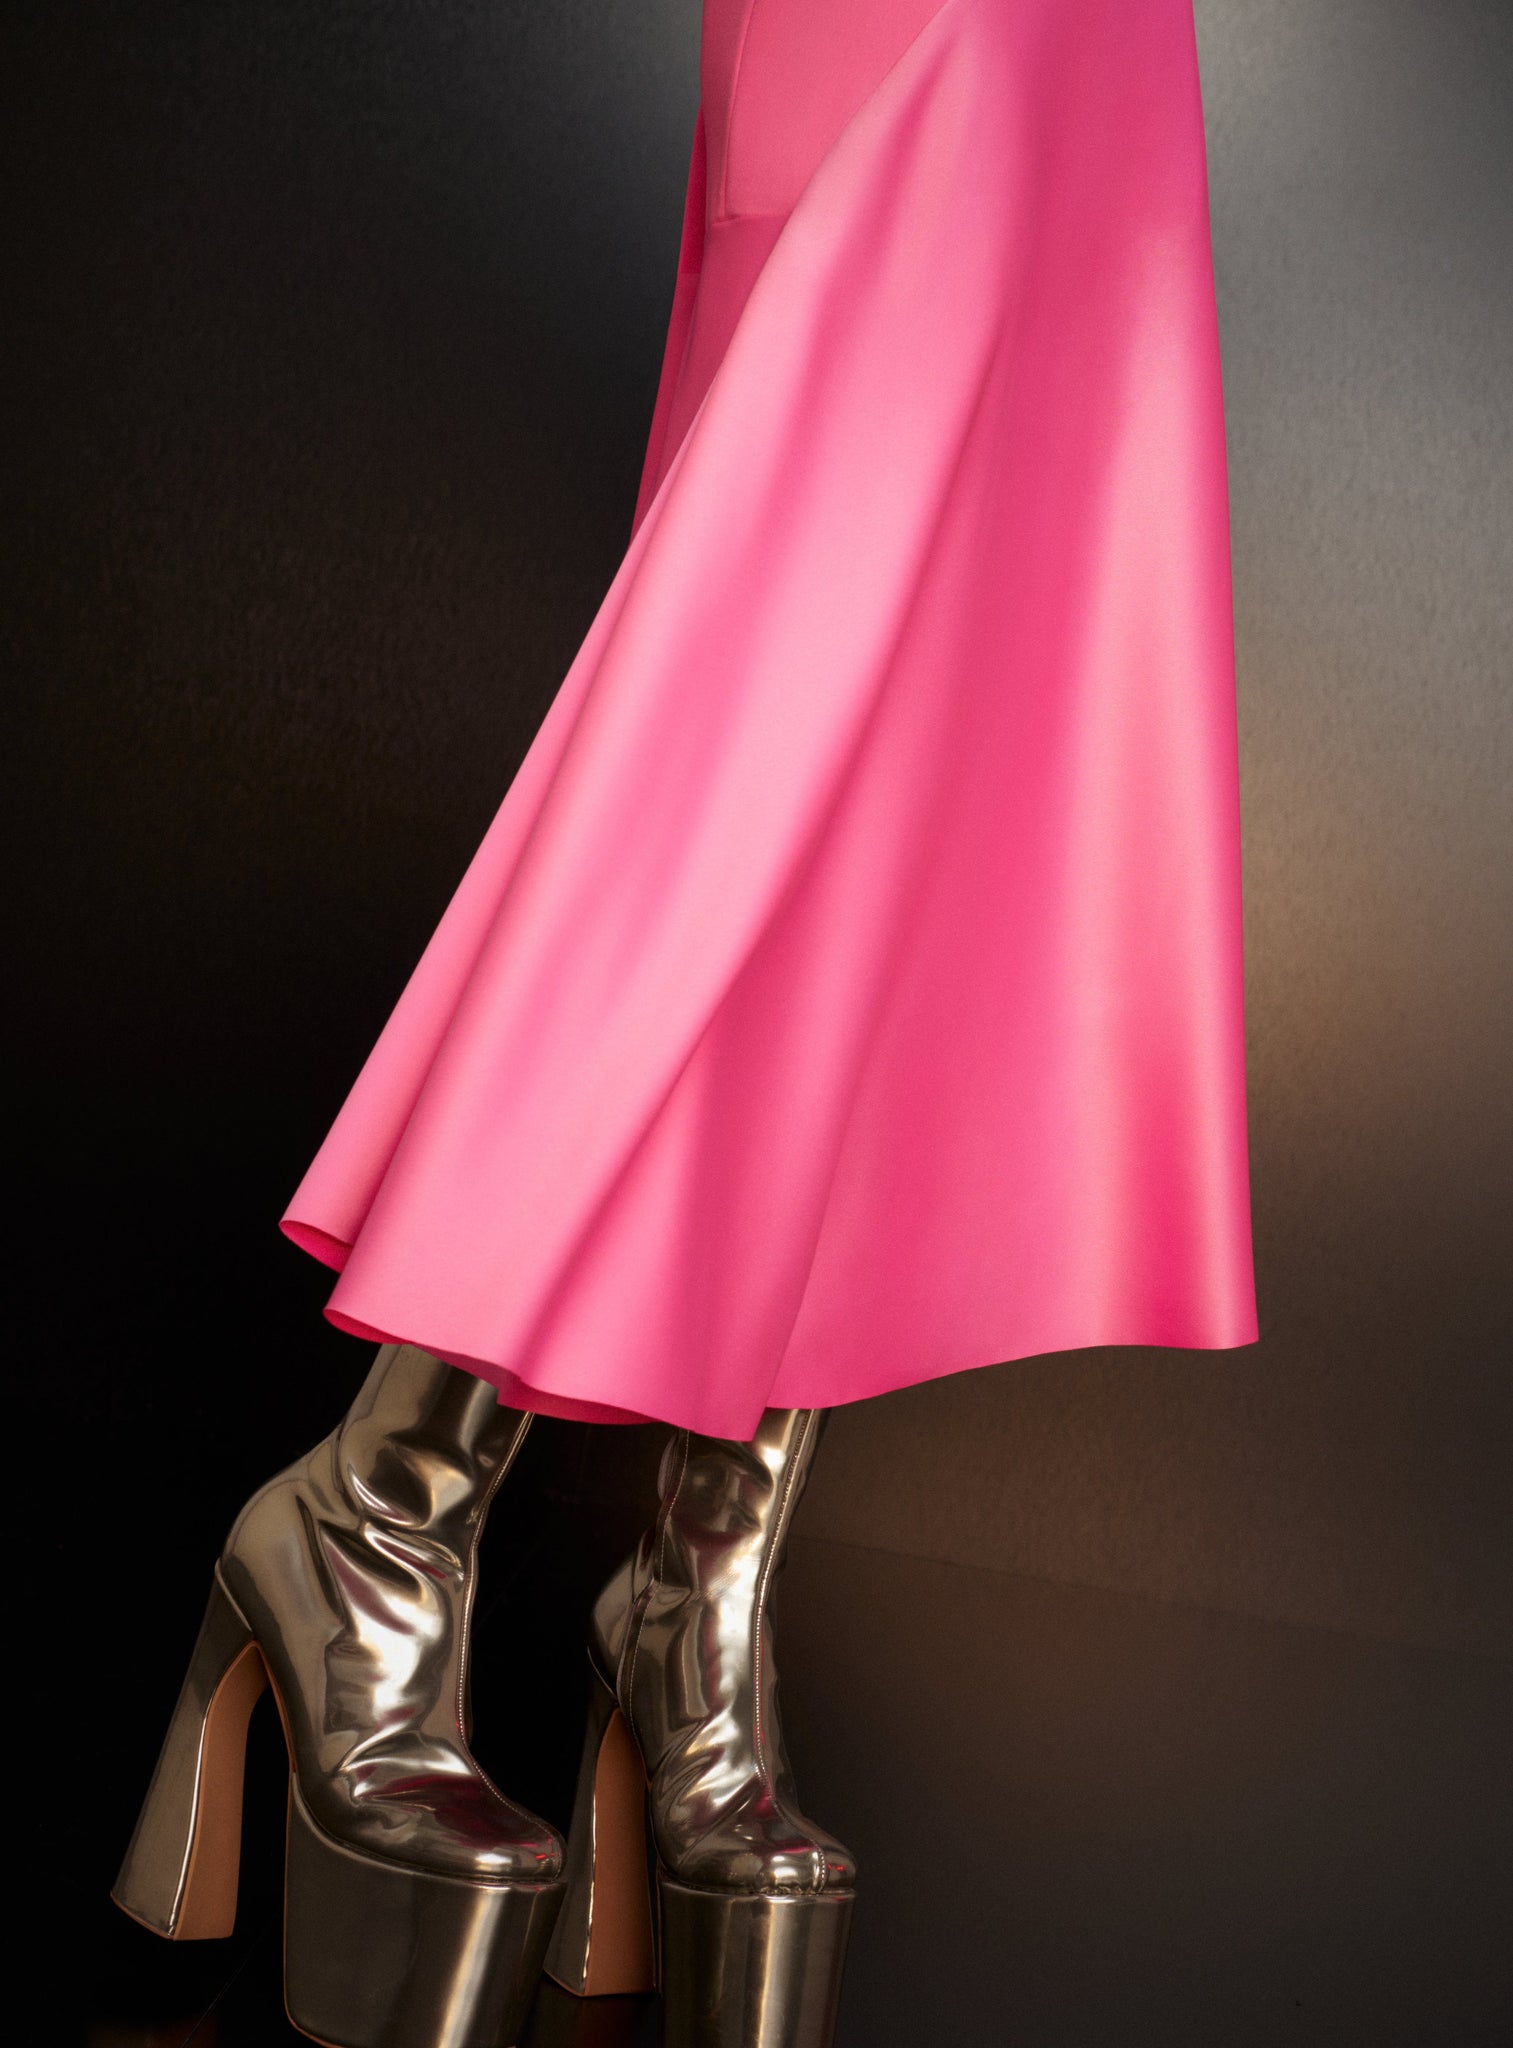 The Gaia Midi Dress in Pink